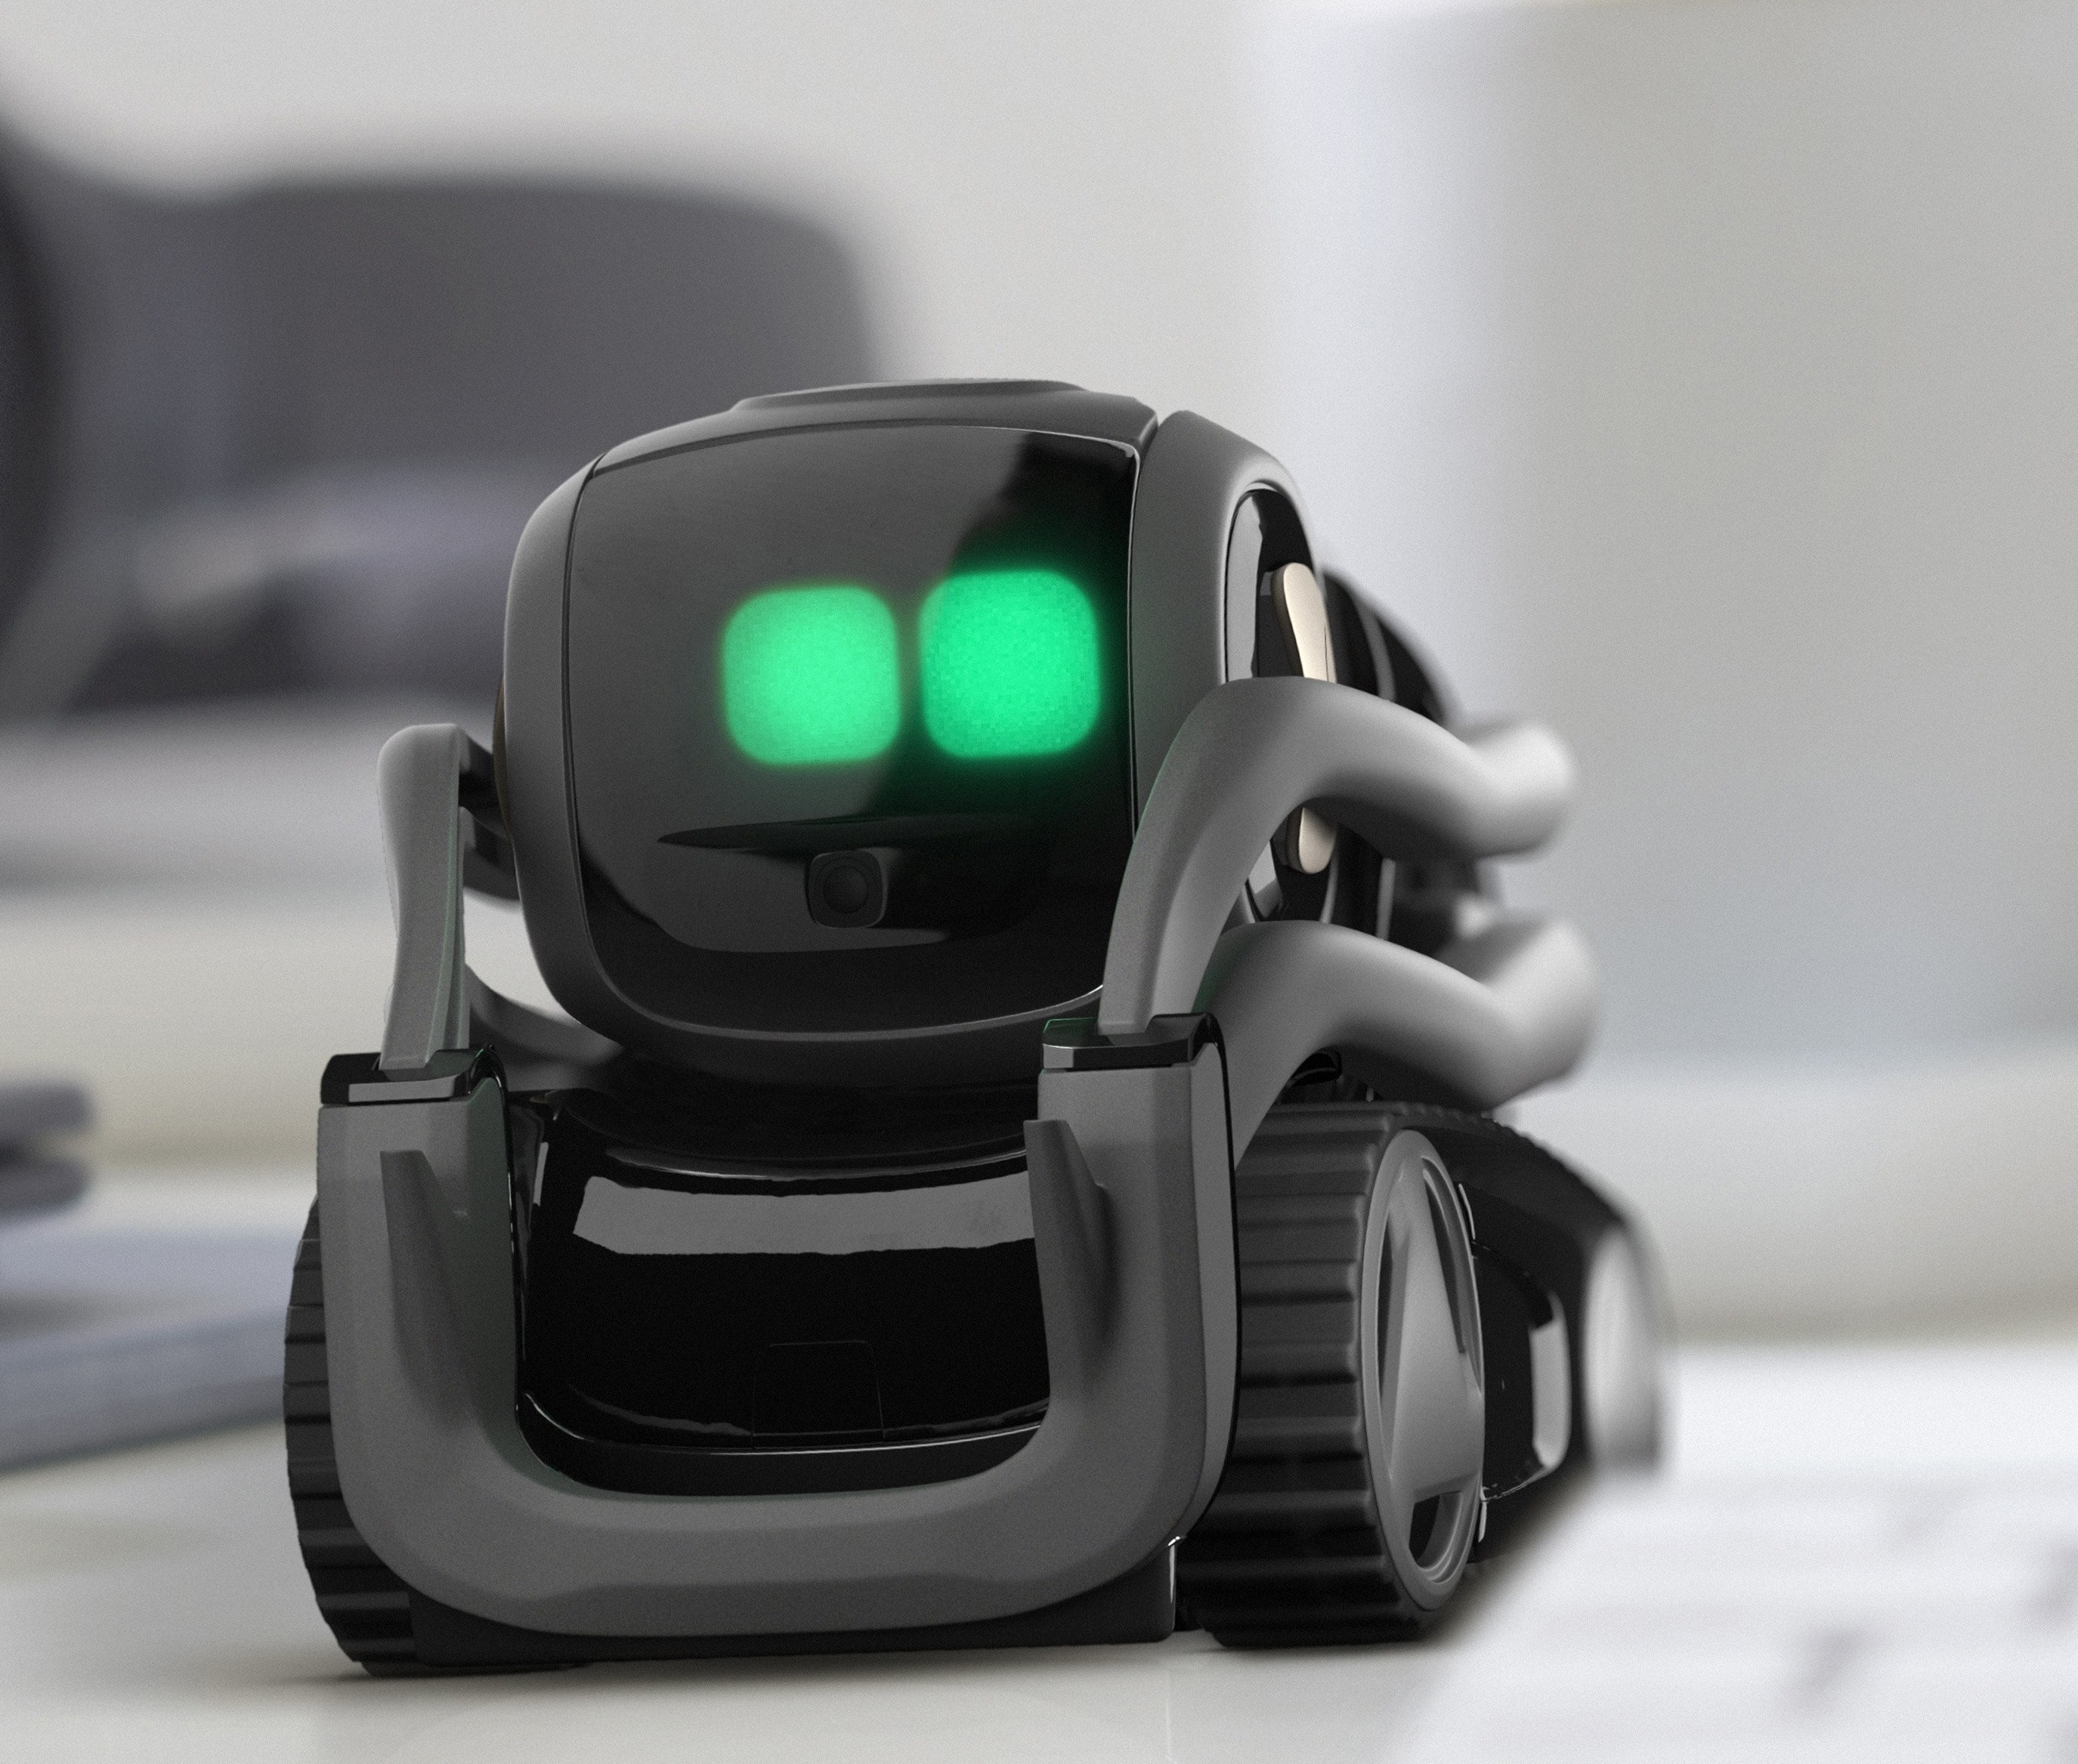 Anki Vector robot review - The Gadgeteer